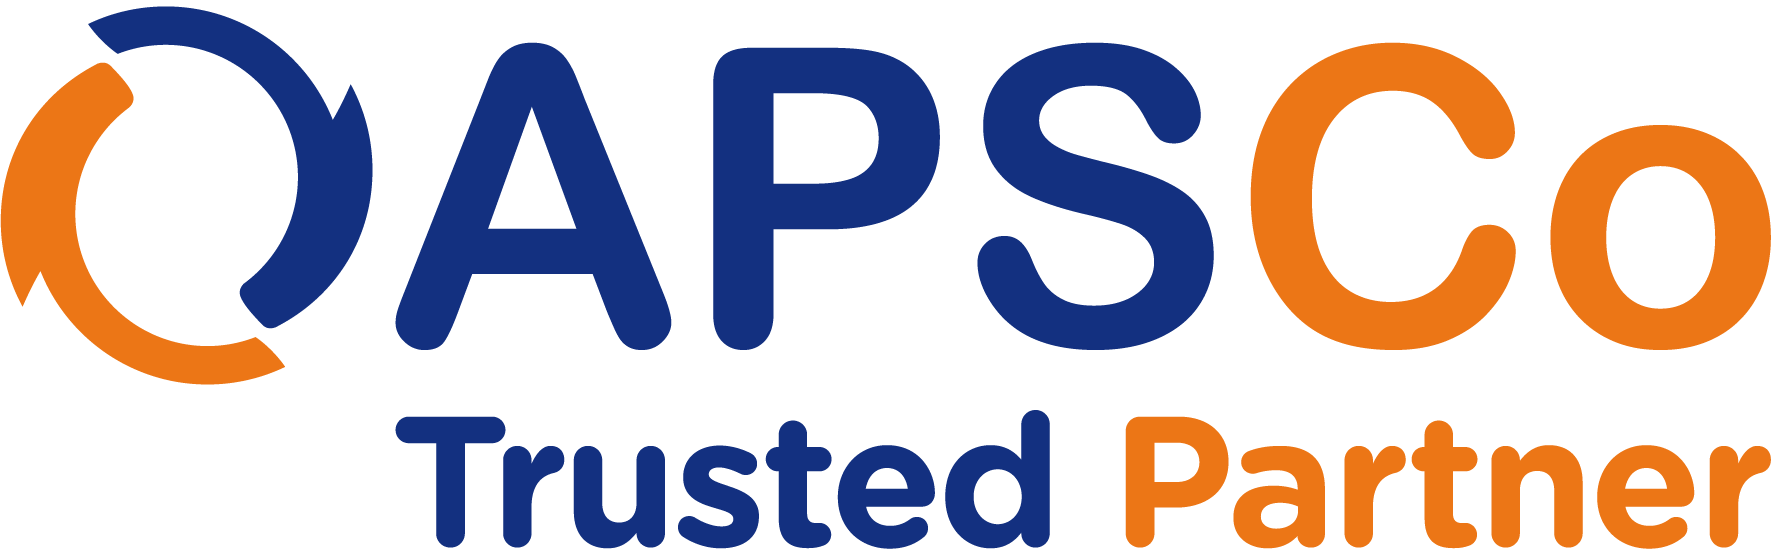 APSCo Trusted Partner logo